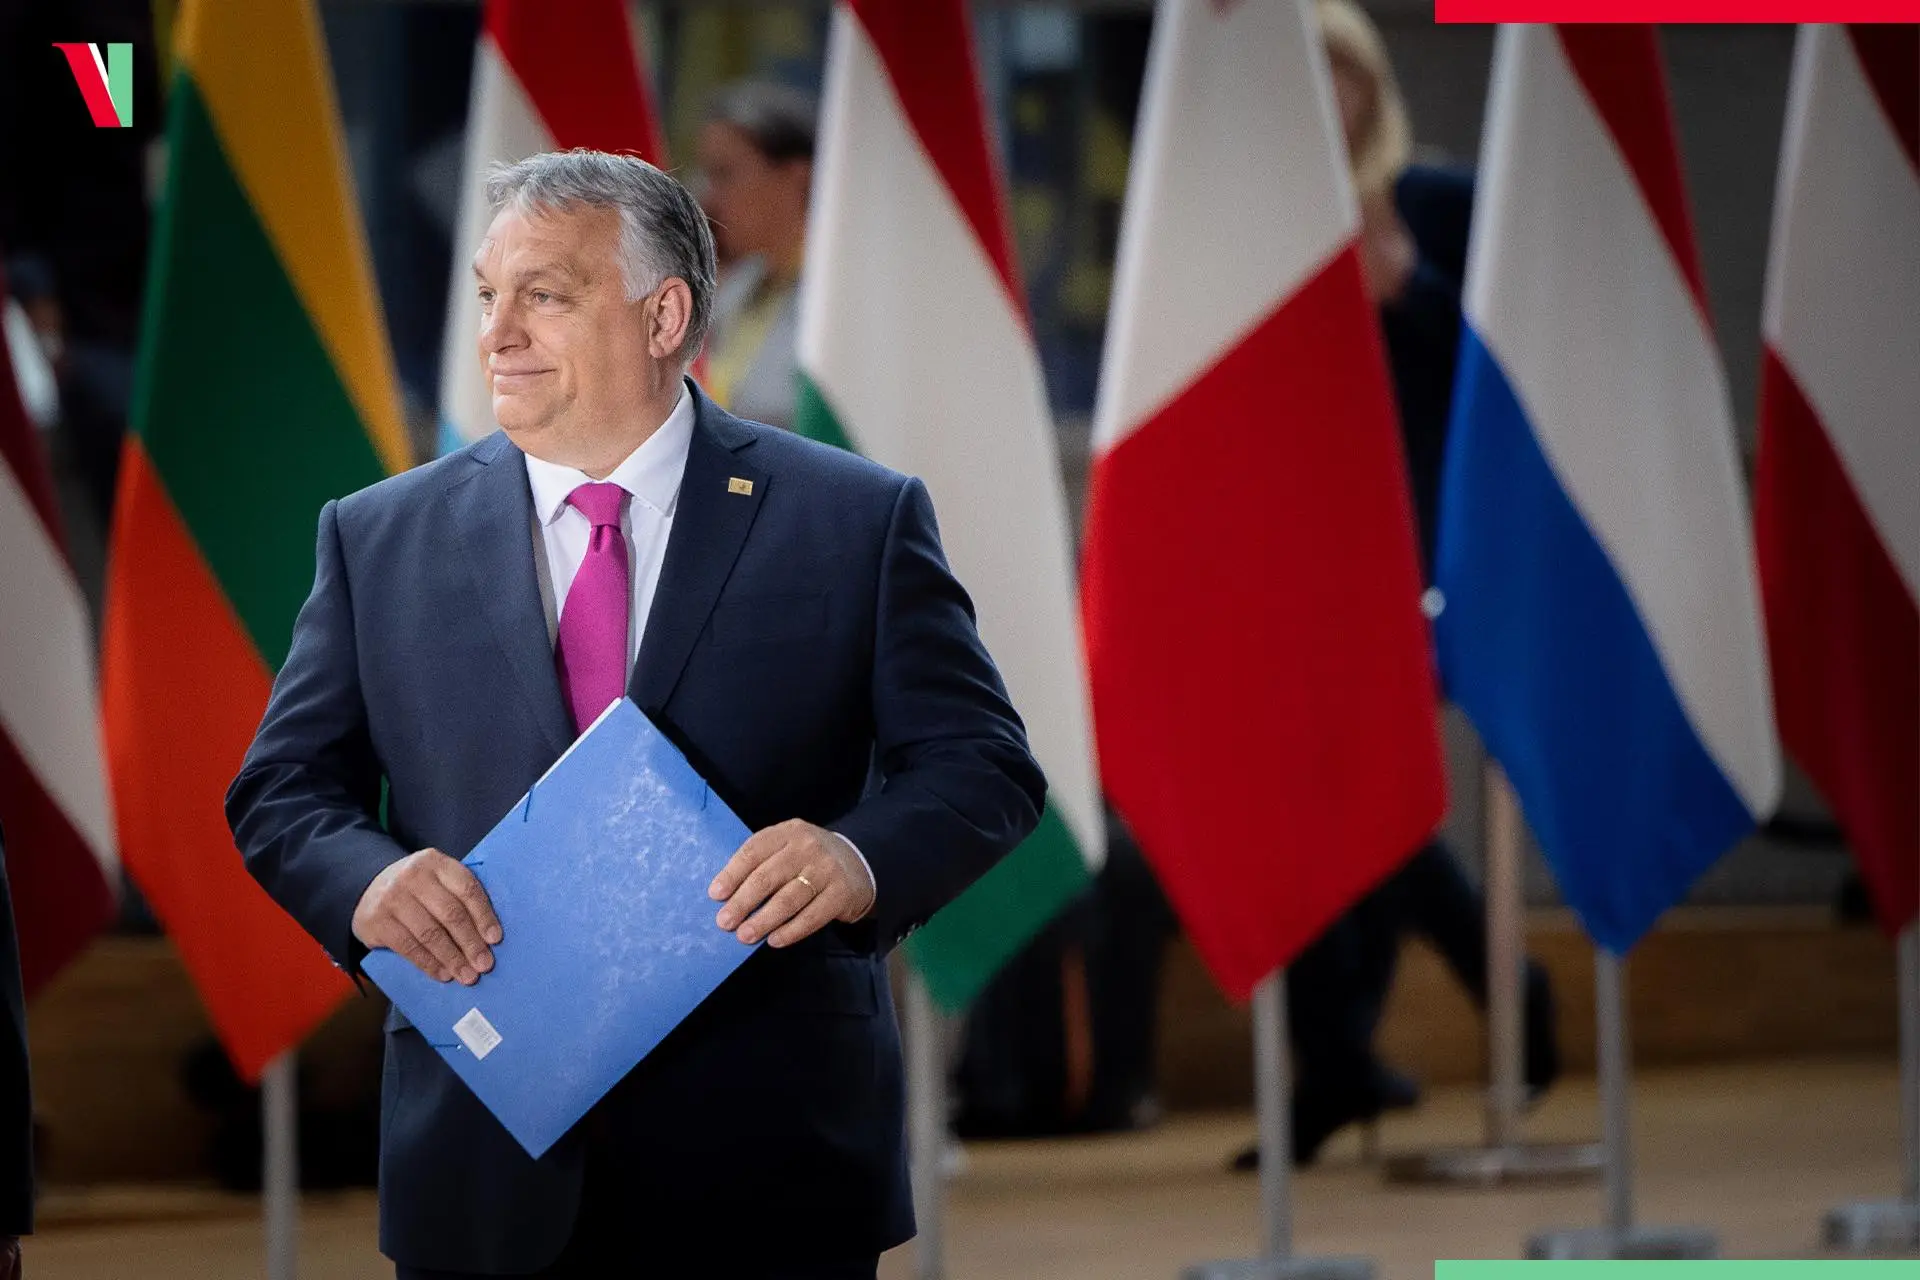 Hungarian PM Viktor Orbán